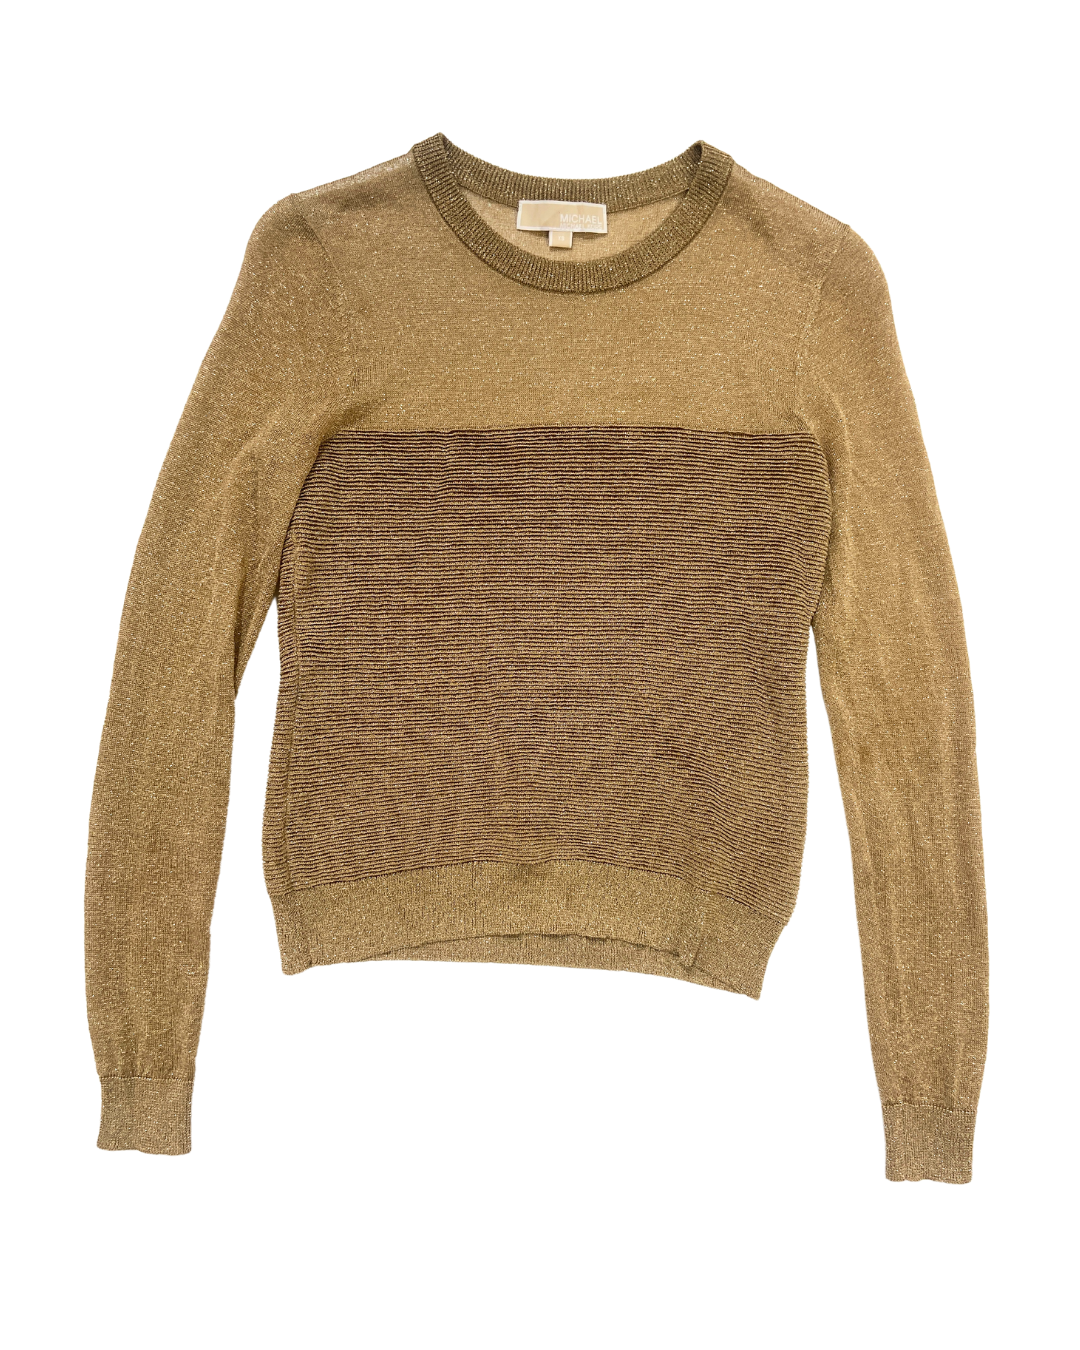 second hand Michael Kors Michael Kors Metallic Gold Knit Sweater 14 OWNI